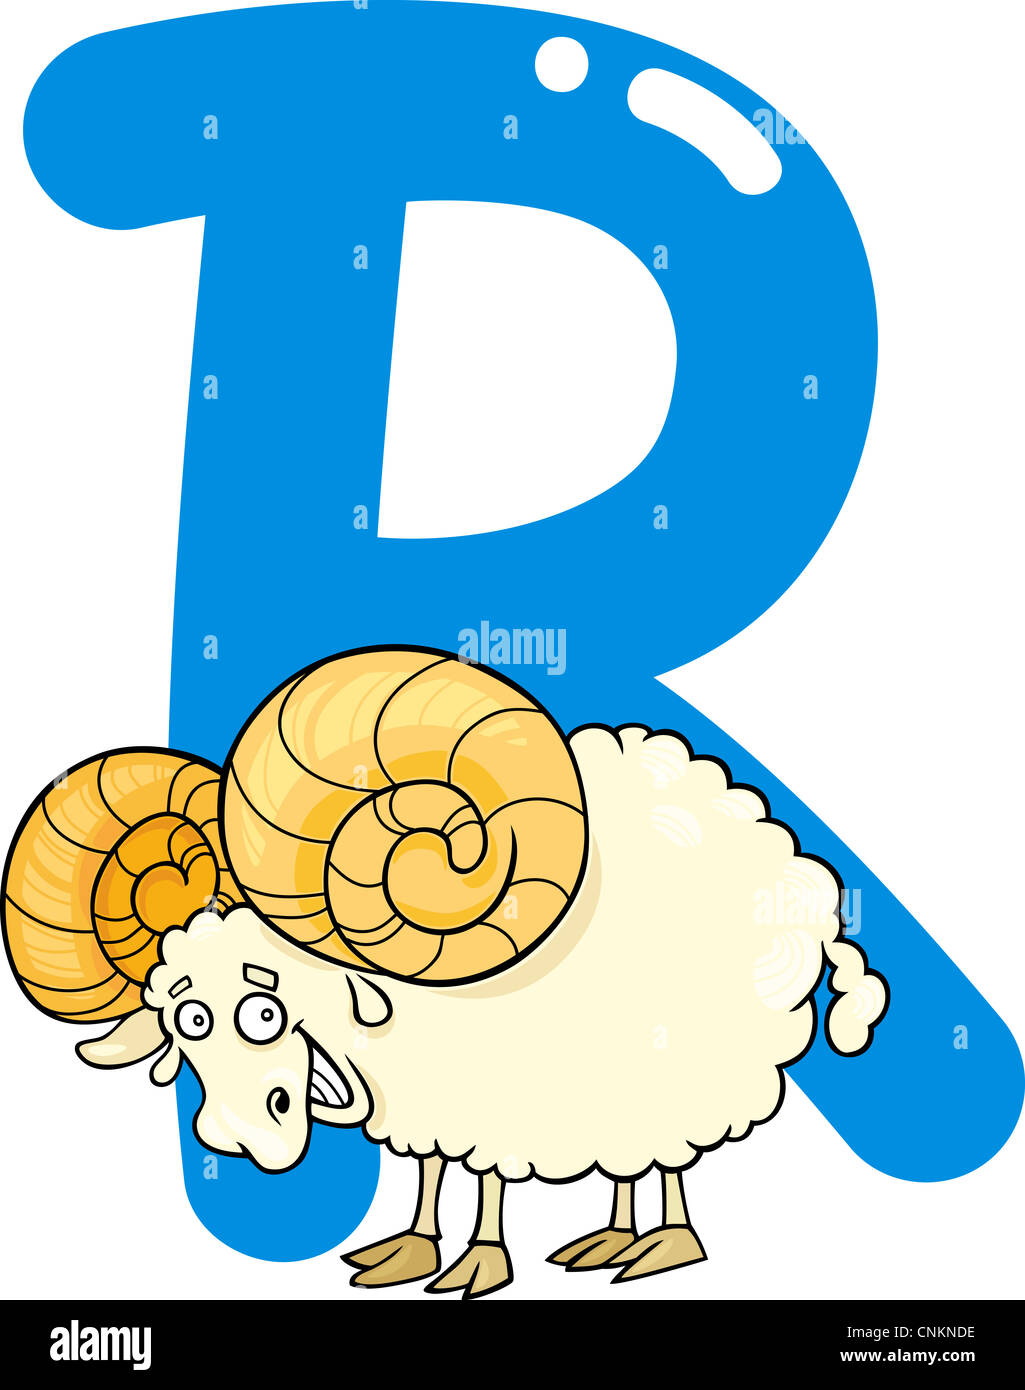 cartoon illustration of R letter for ram Stock Photo - Alamy